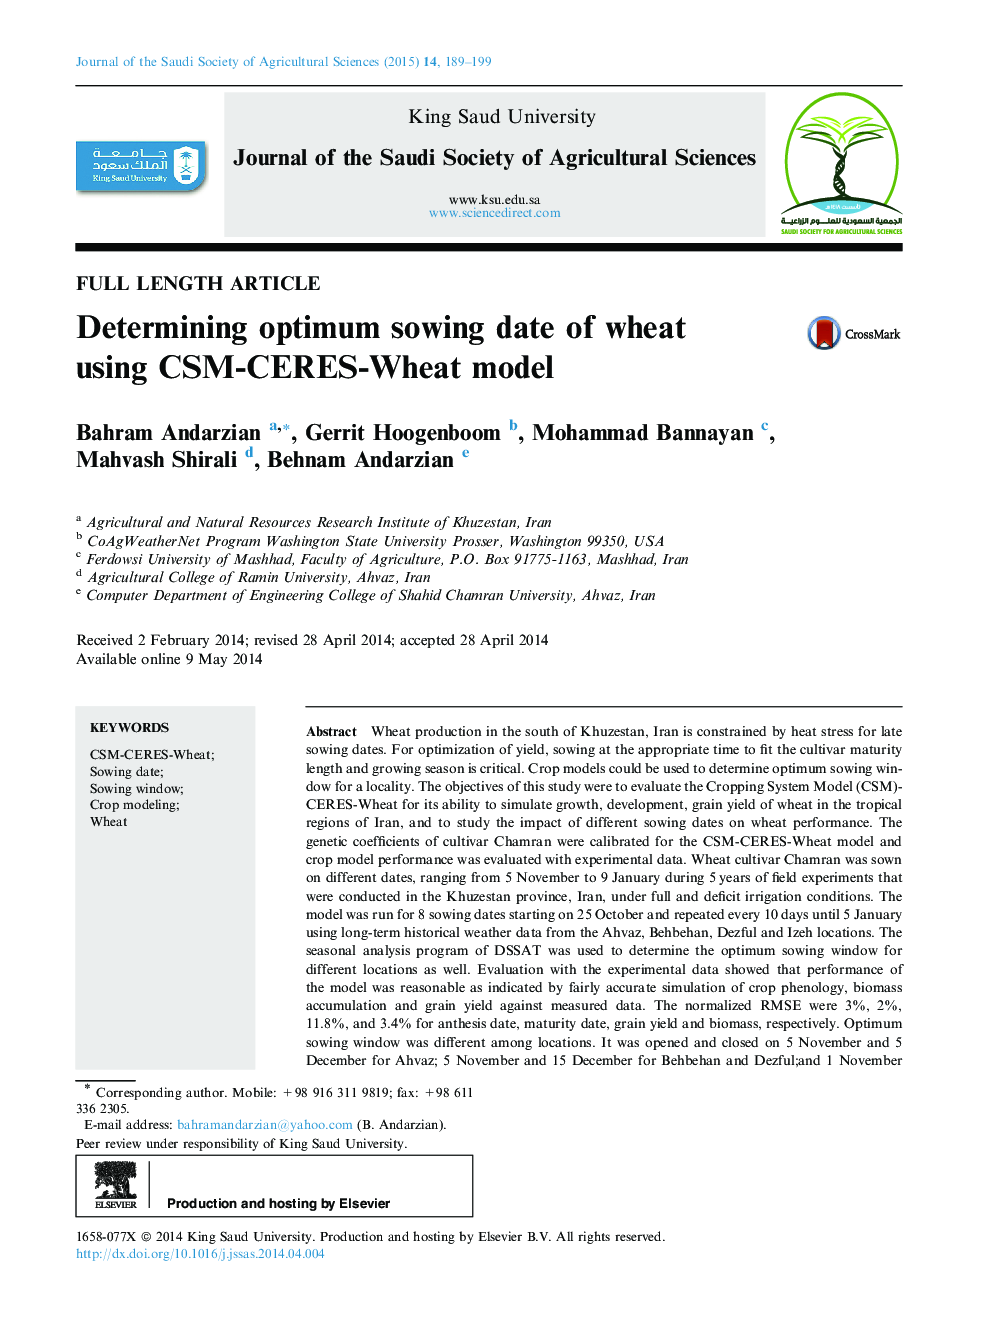 Determining optimum sowing date of wheat using CSM-CERES-Wheat model 